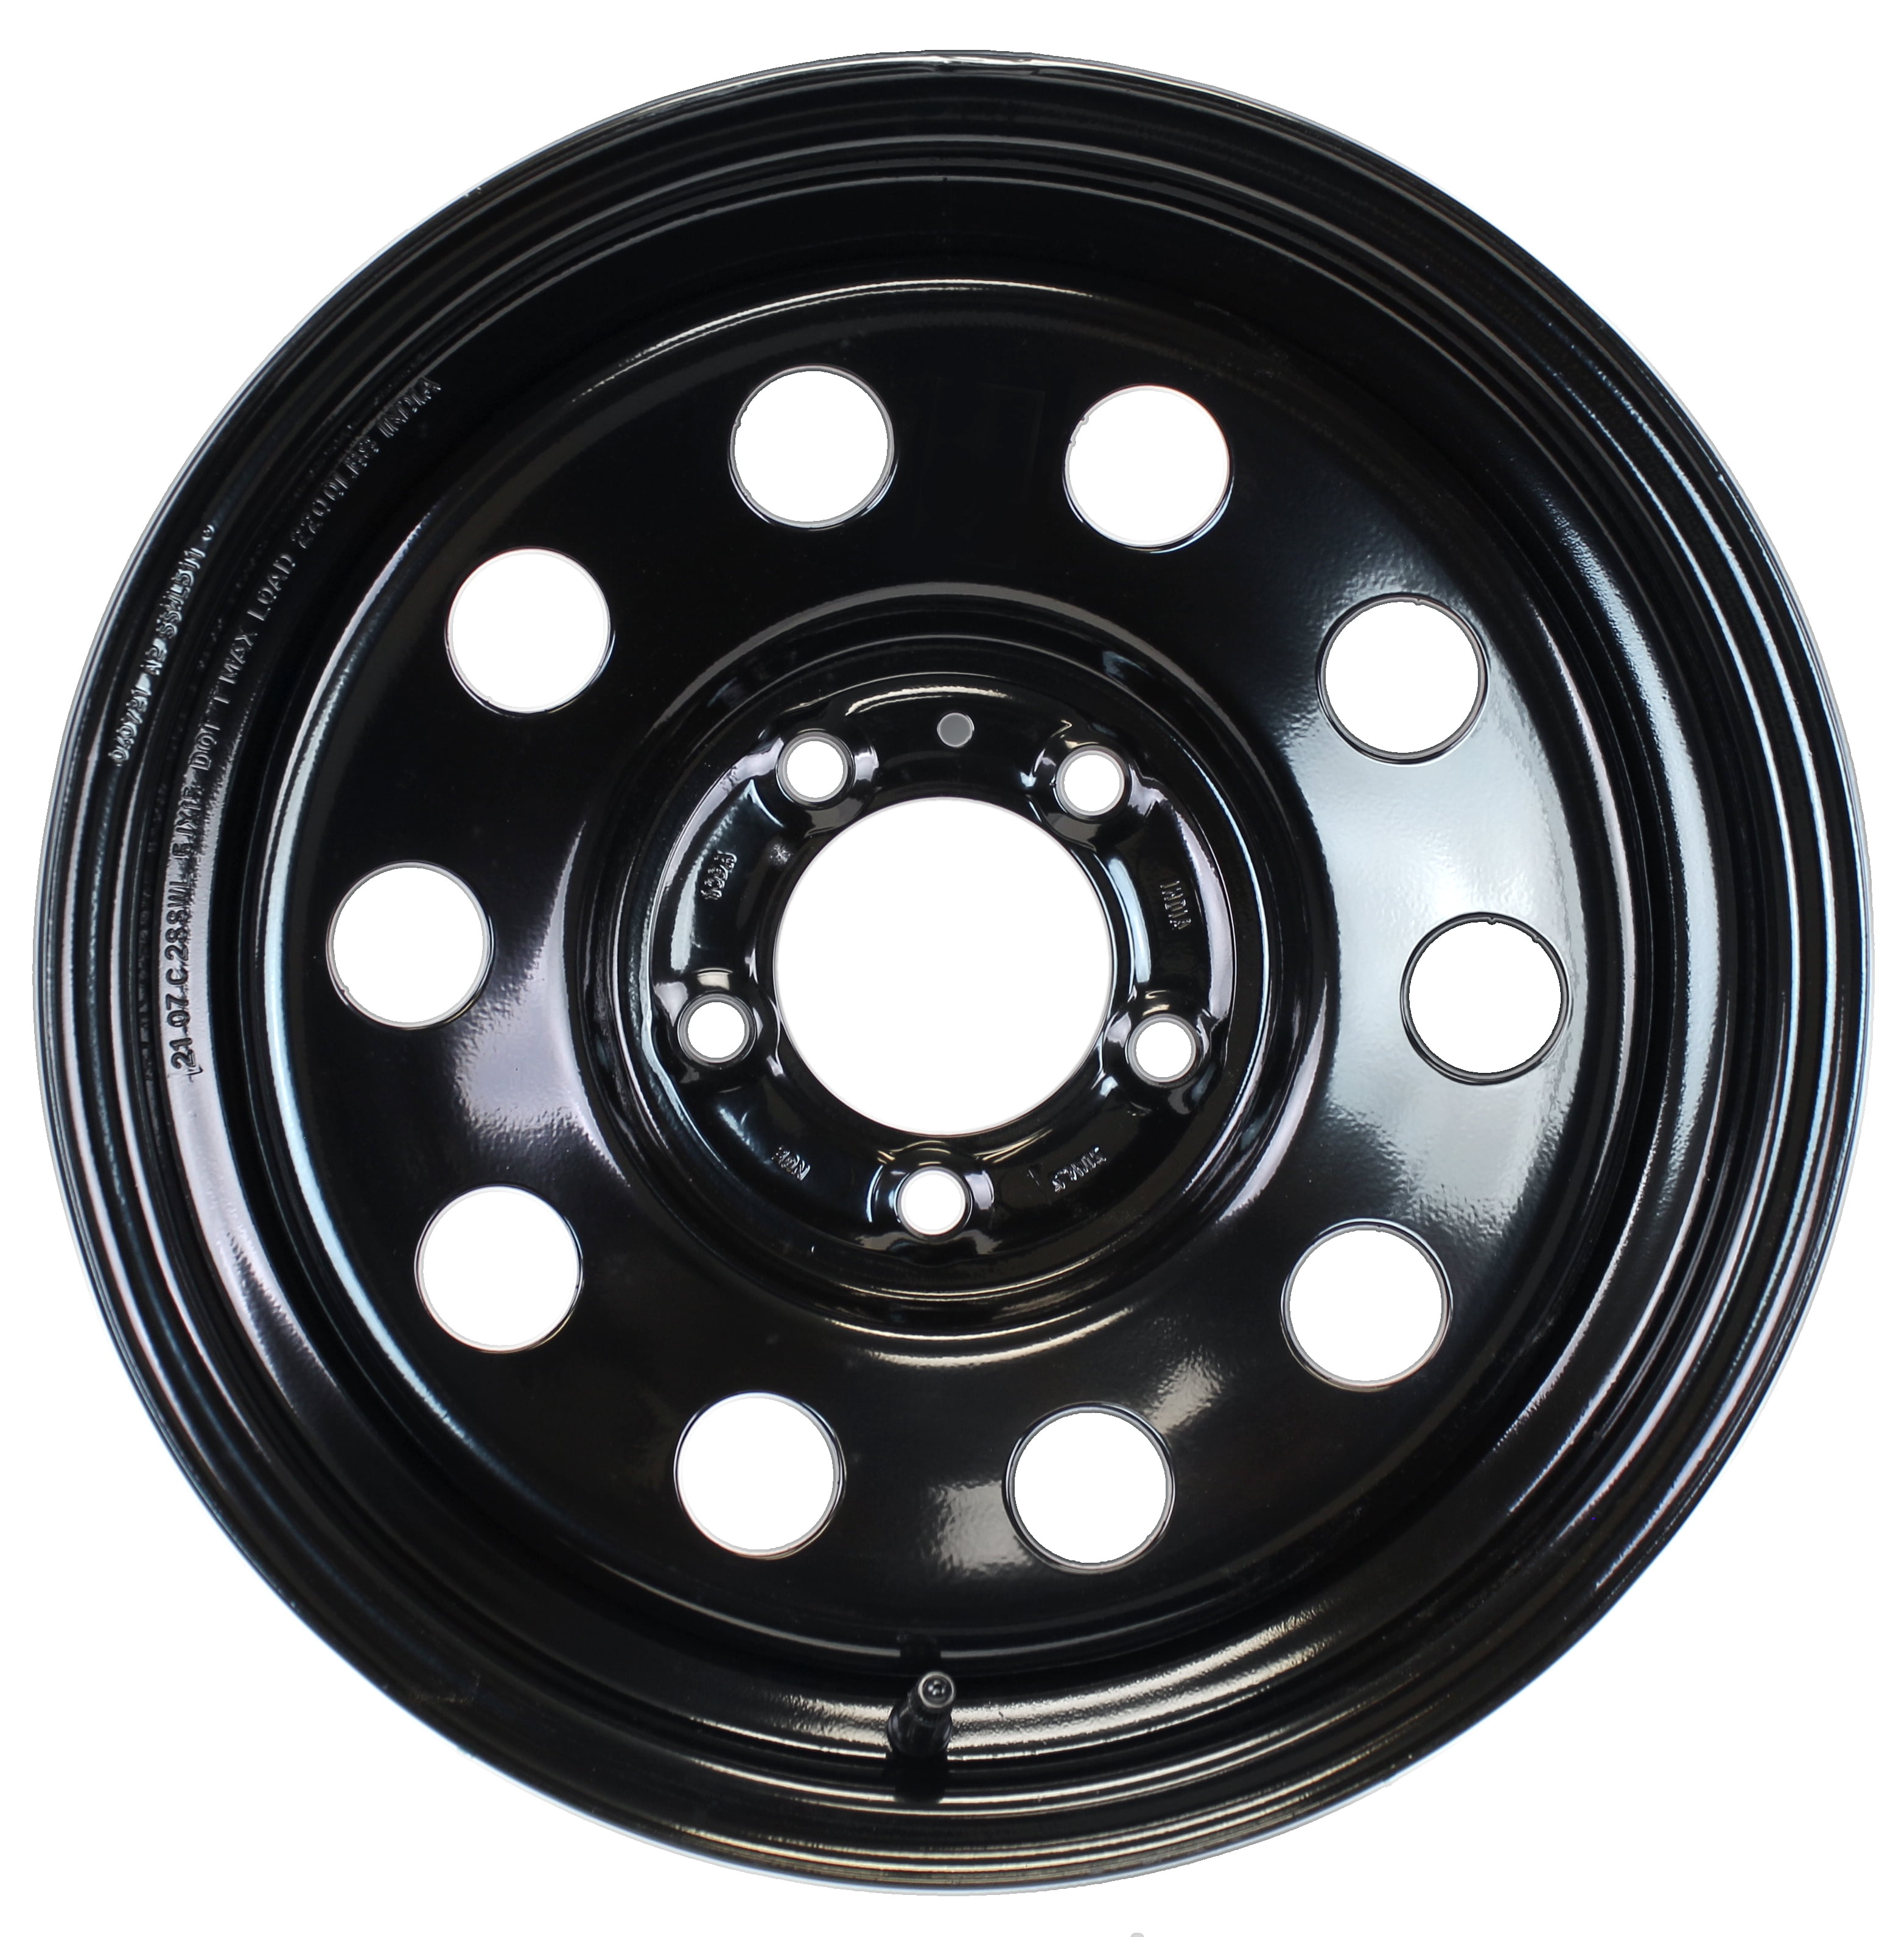 eCustomrim Trailer Rim Wheel 15X5 5-4.5 Black Modular 2150 Lb 3.19 Center Bore 